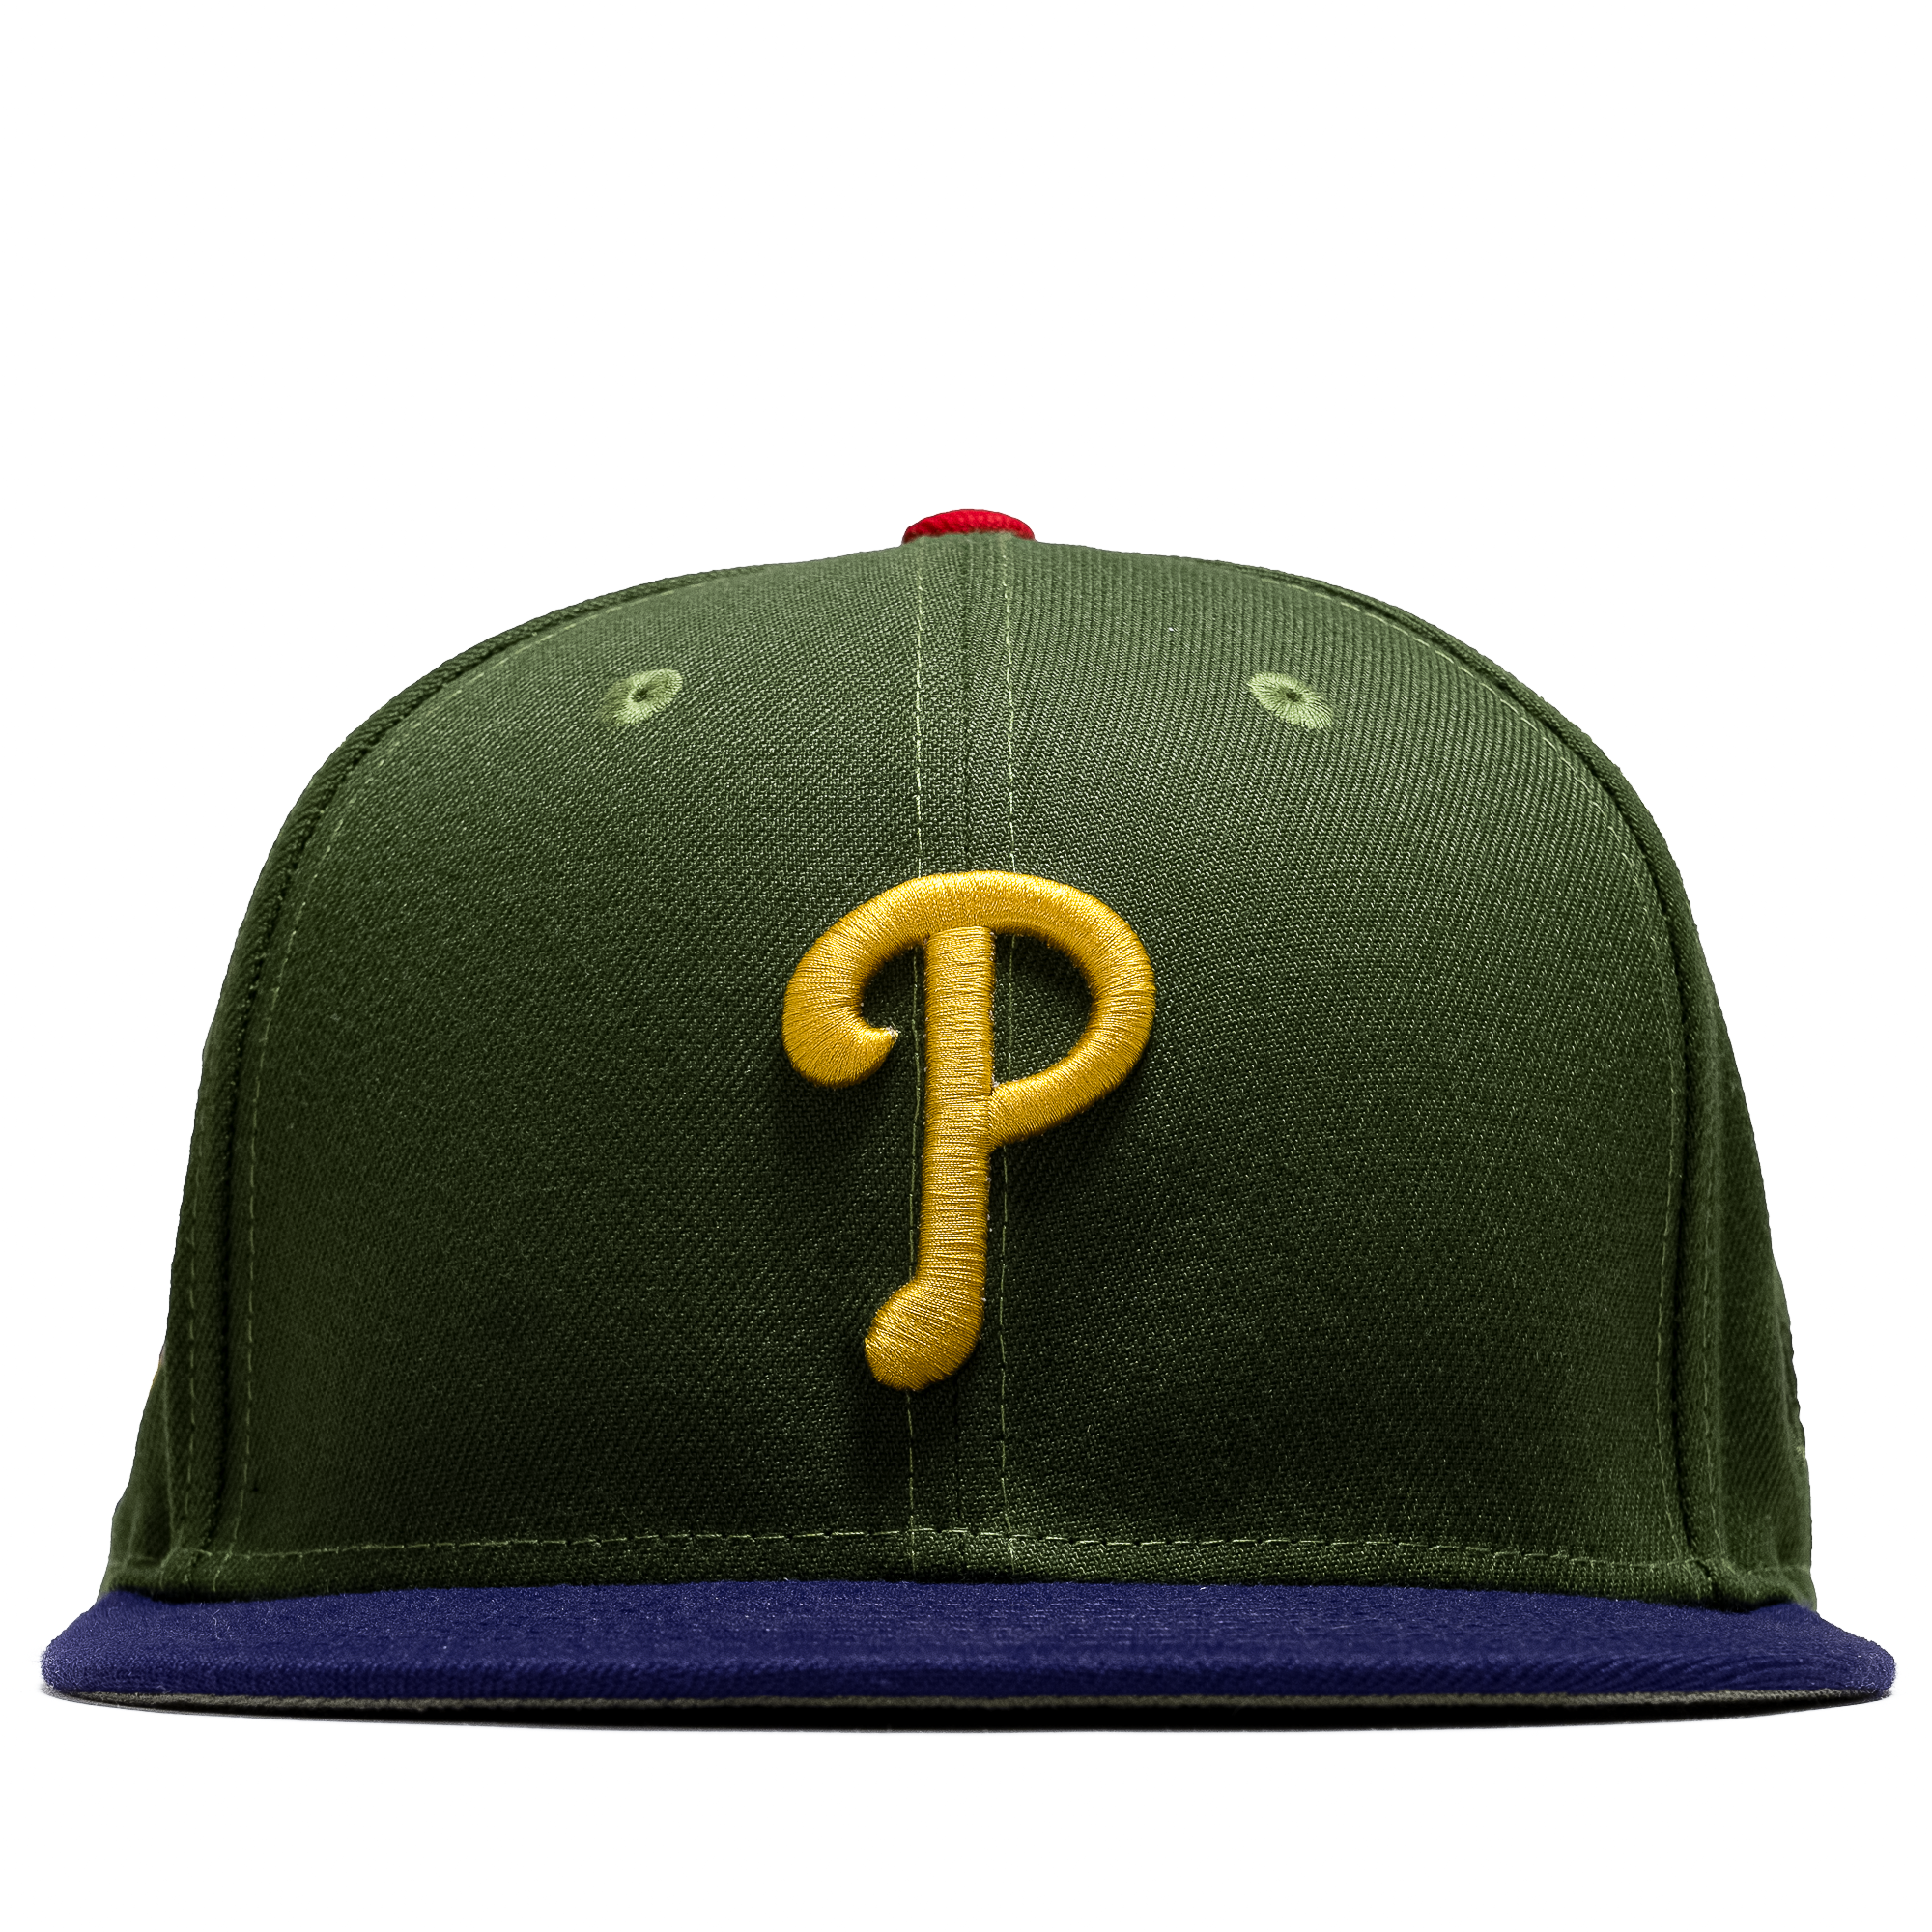 New Era Philadelphia Phillies Cardinal Fitted Hat World Series